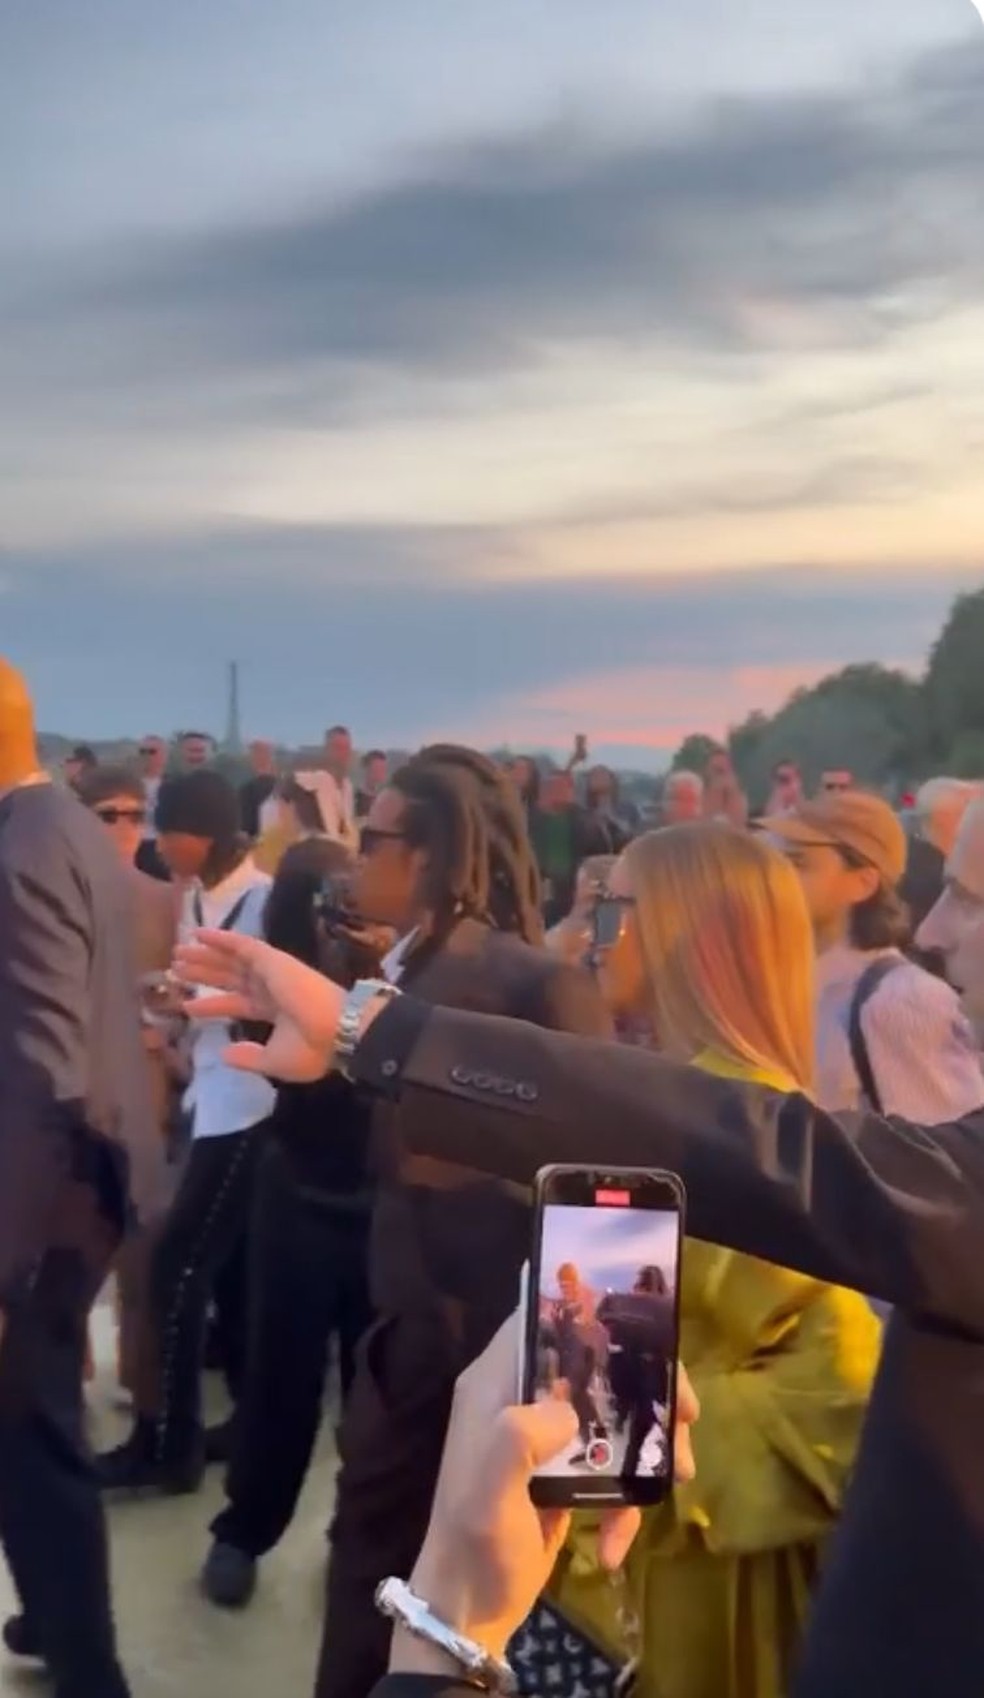 Beyoncé e Jay Z são grandes destaques no desfile da Louis Vuitton